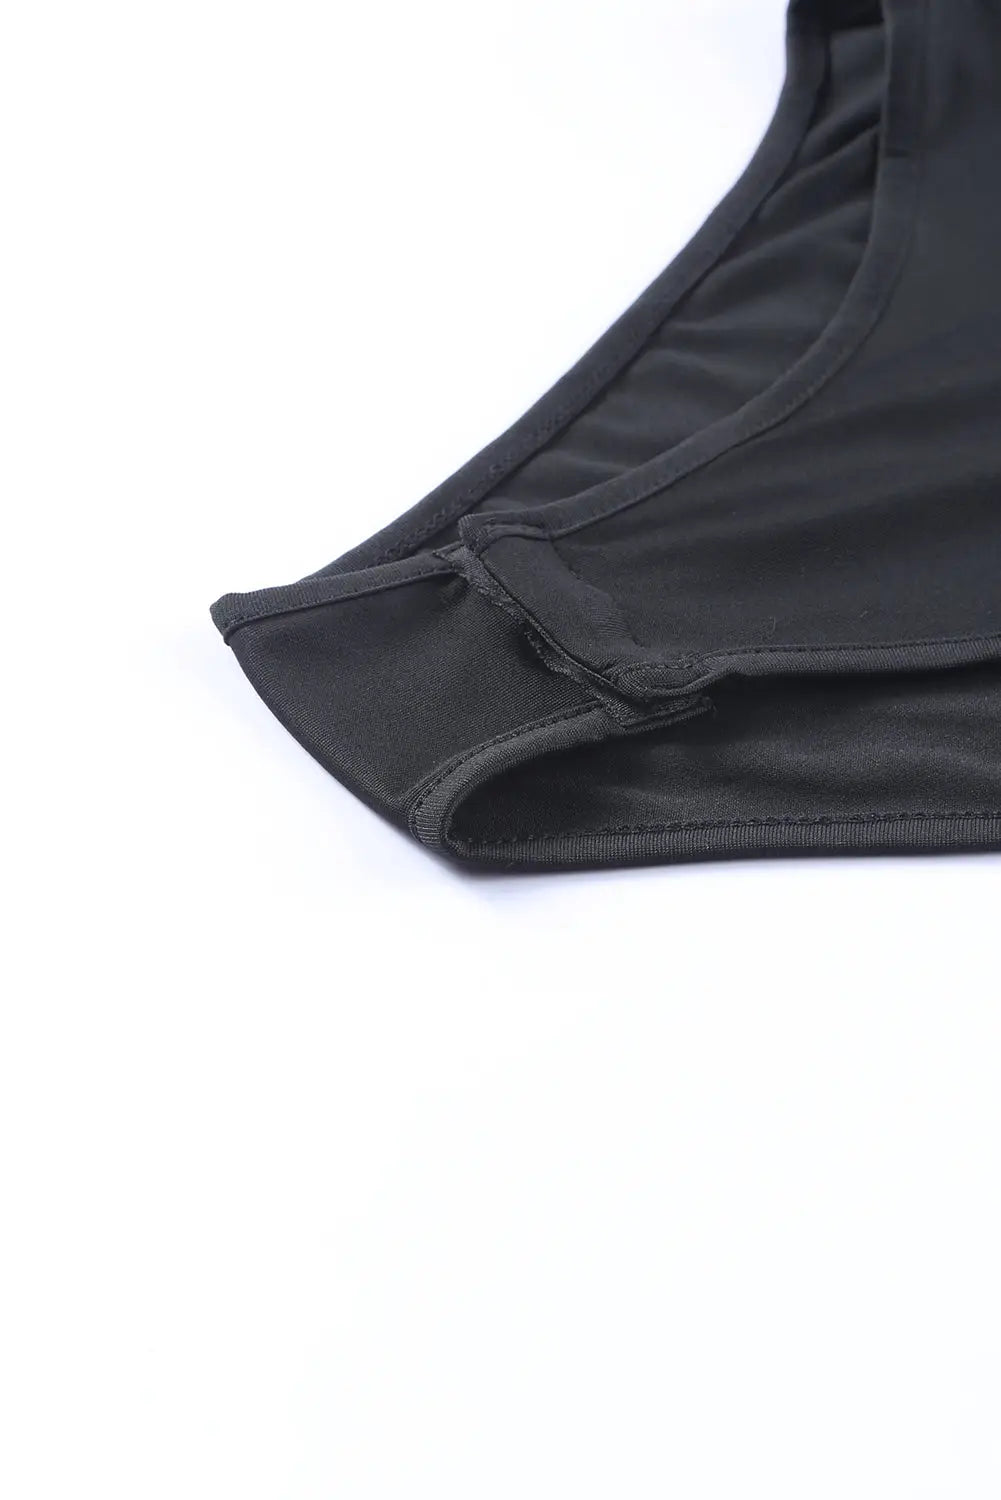 Spliced leopard print wrap long sleeve bodysuit - l / 100% polyester - bodysuits